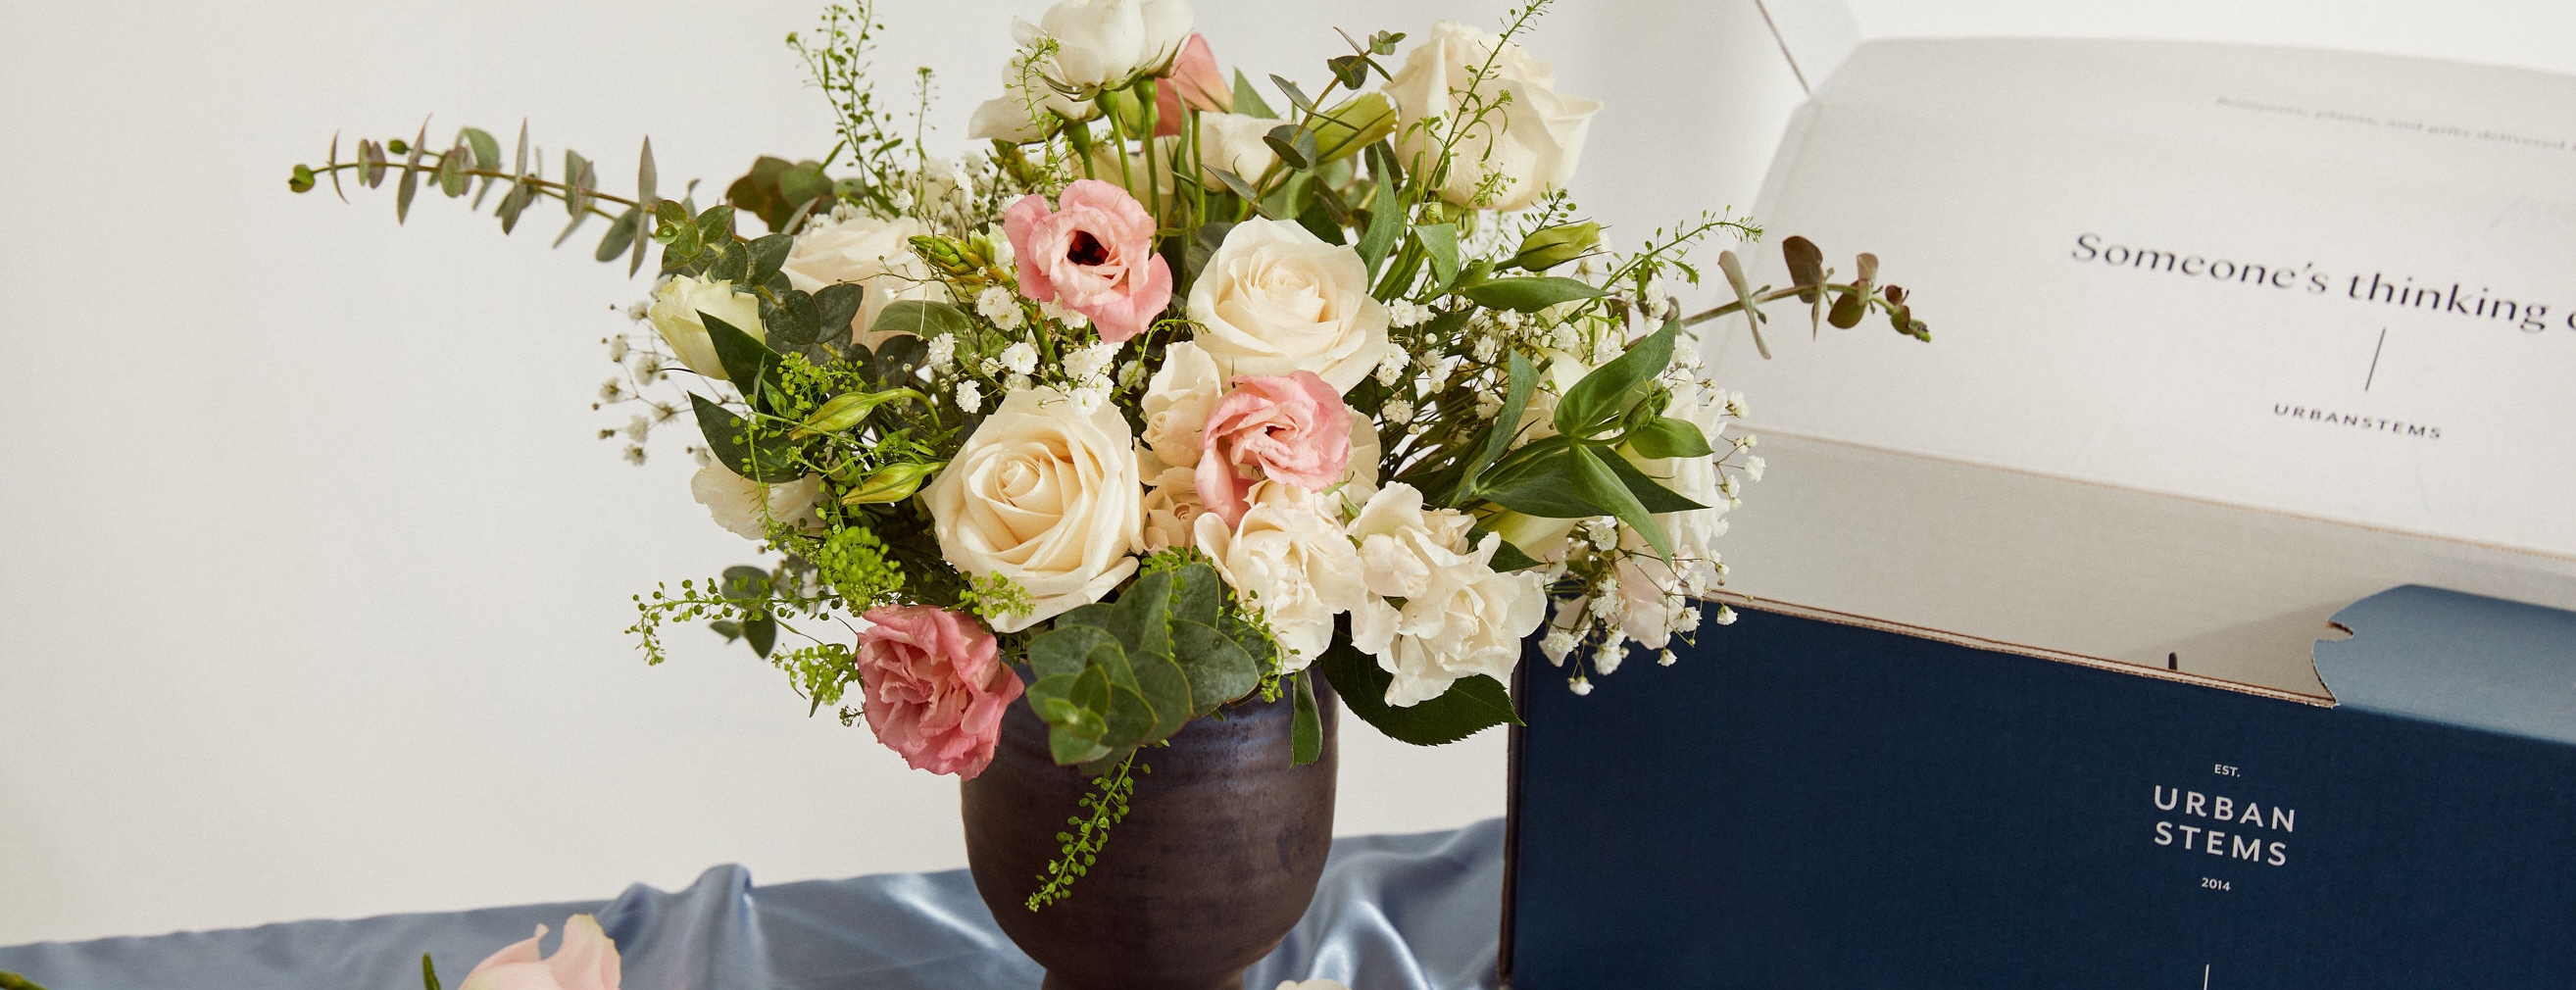 Romantic flower arrangement with a flower delivery box